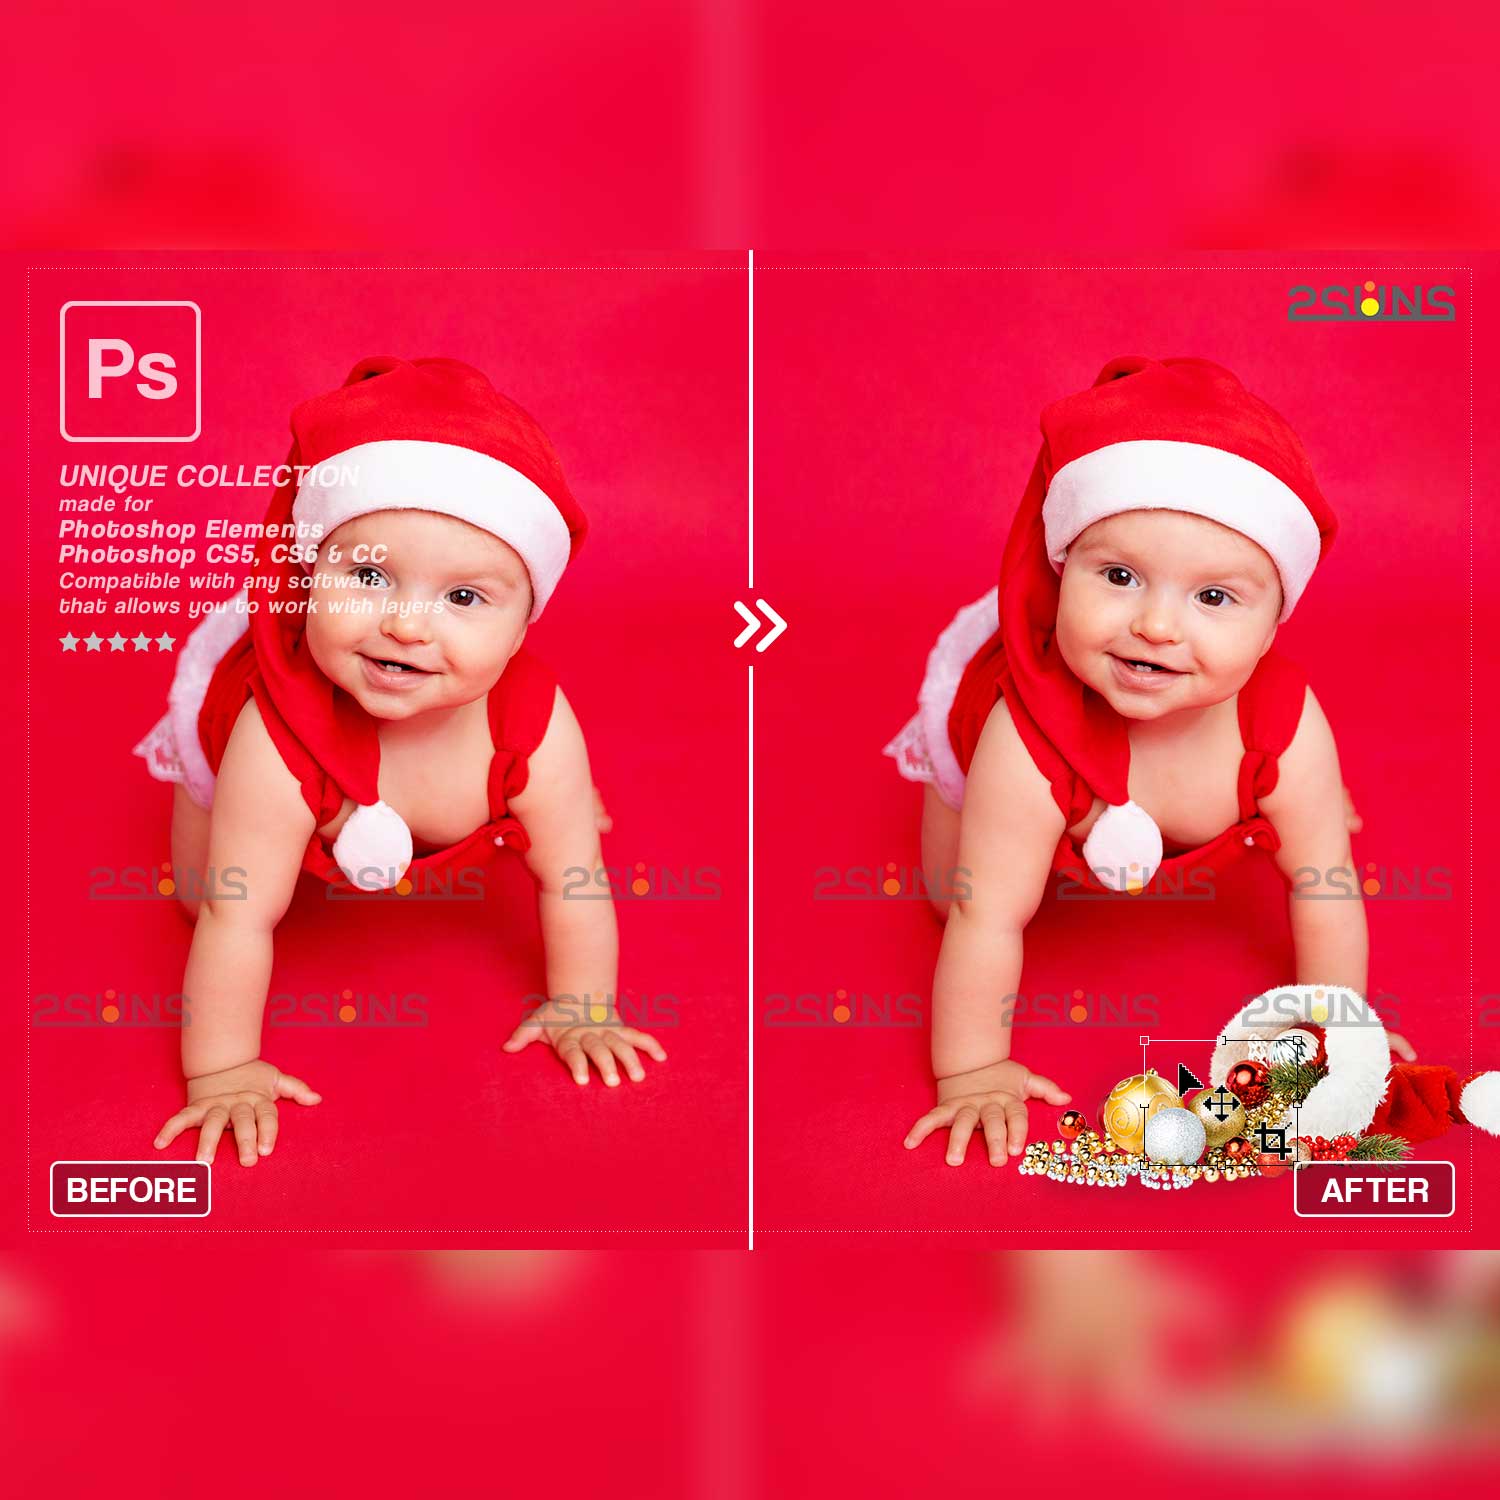 Sparkler overlay, Christmas overlay, Photoshop overlay, Christmas word overlay, Christmas clipart Christmas light overlay, Sparkler overlay cover image.